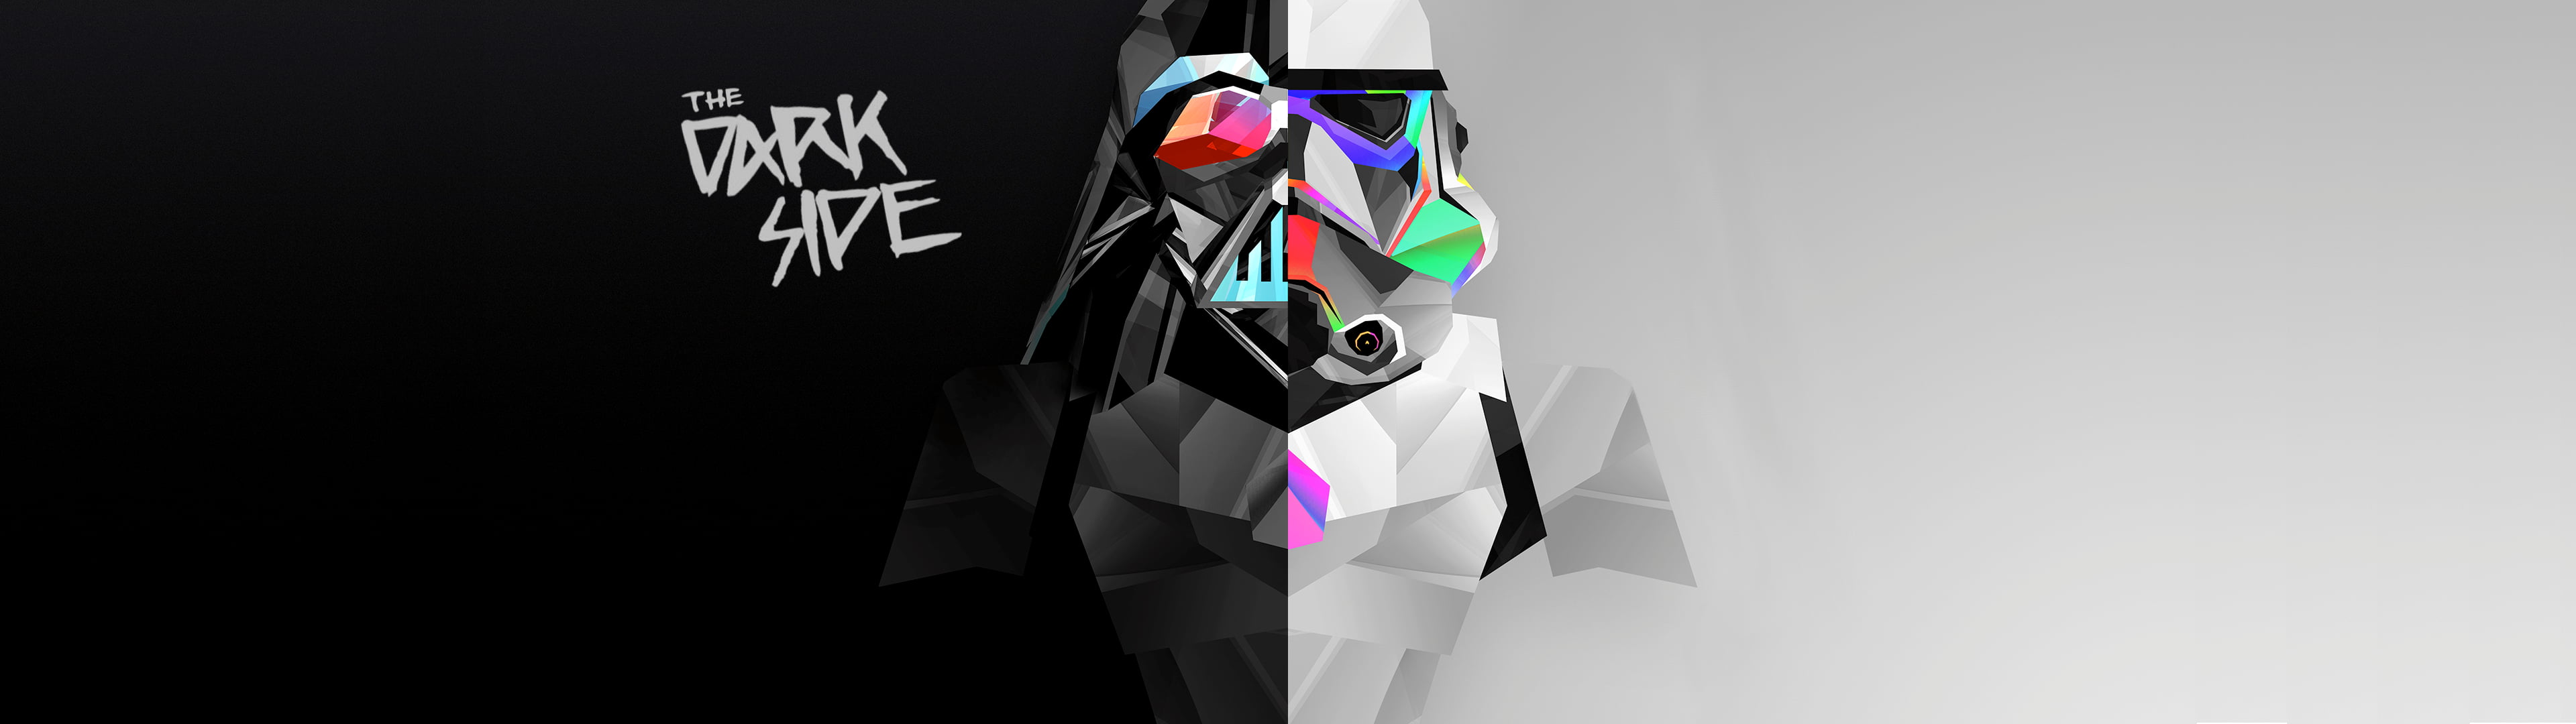 Darth Vader ilustration, multiple display, dual monitors, abstract, digital art